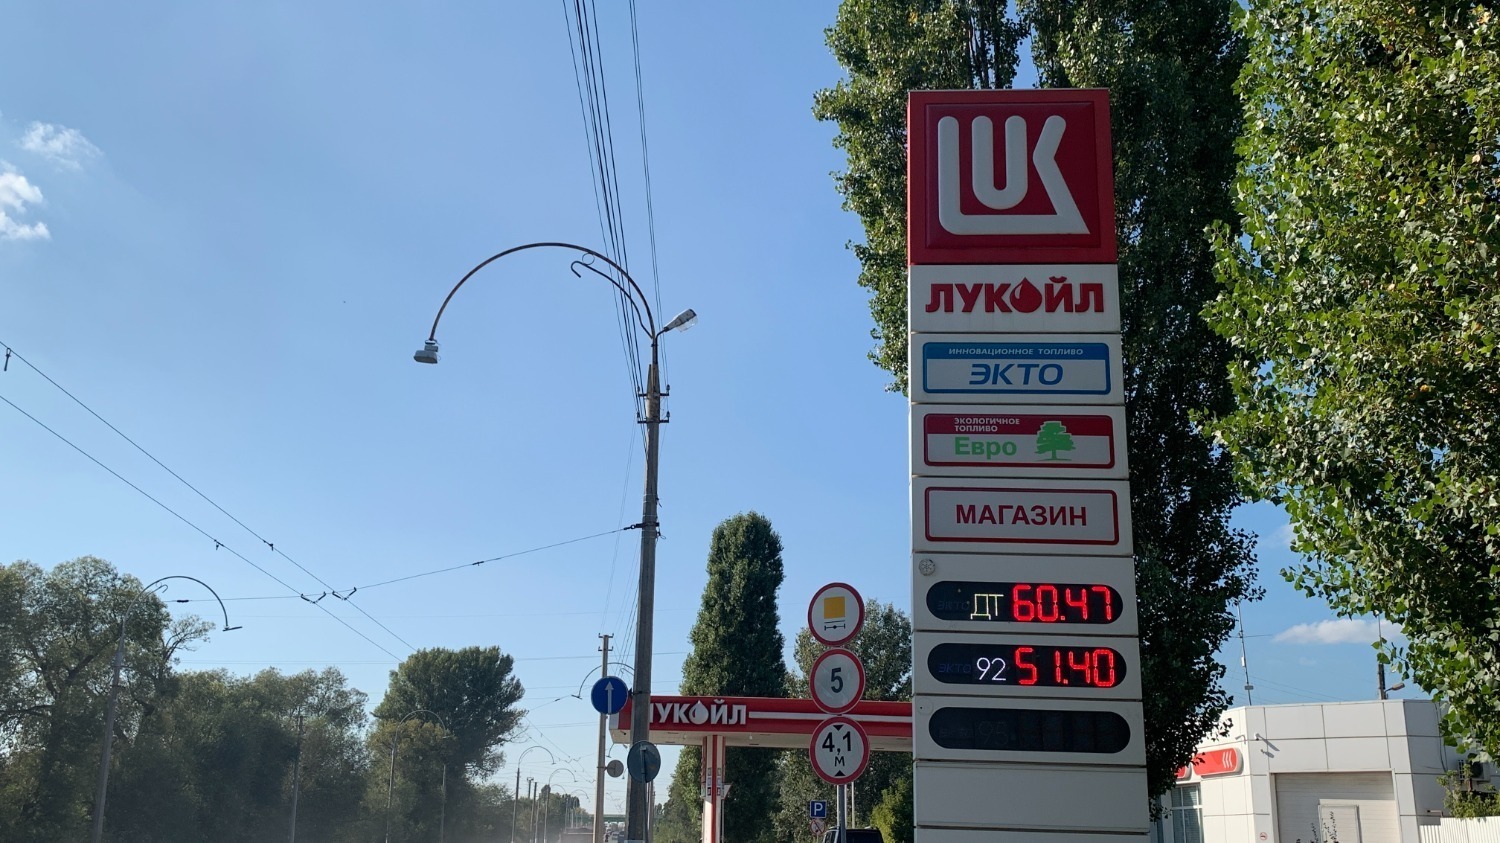 цены на бензин в Белгороде